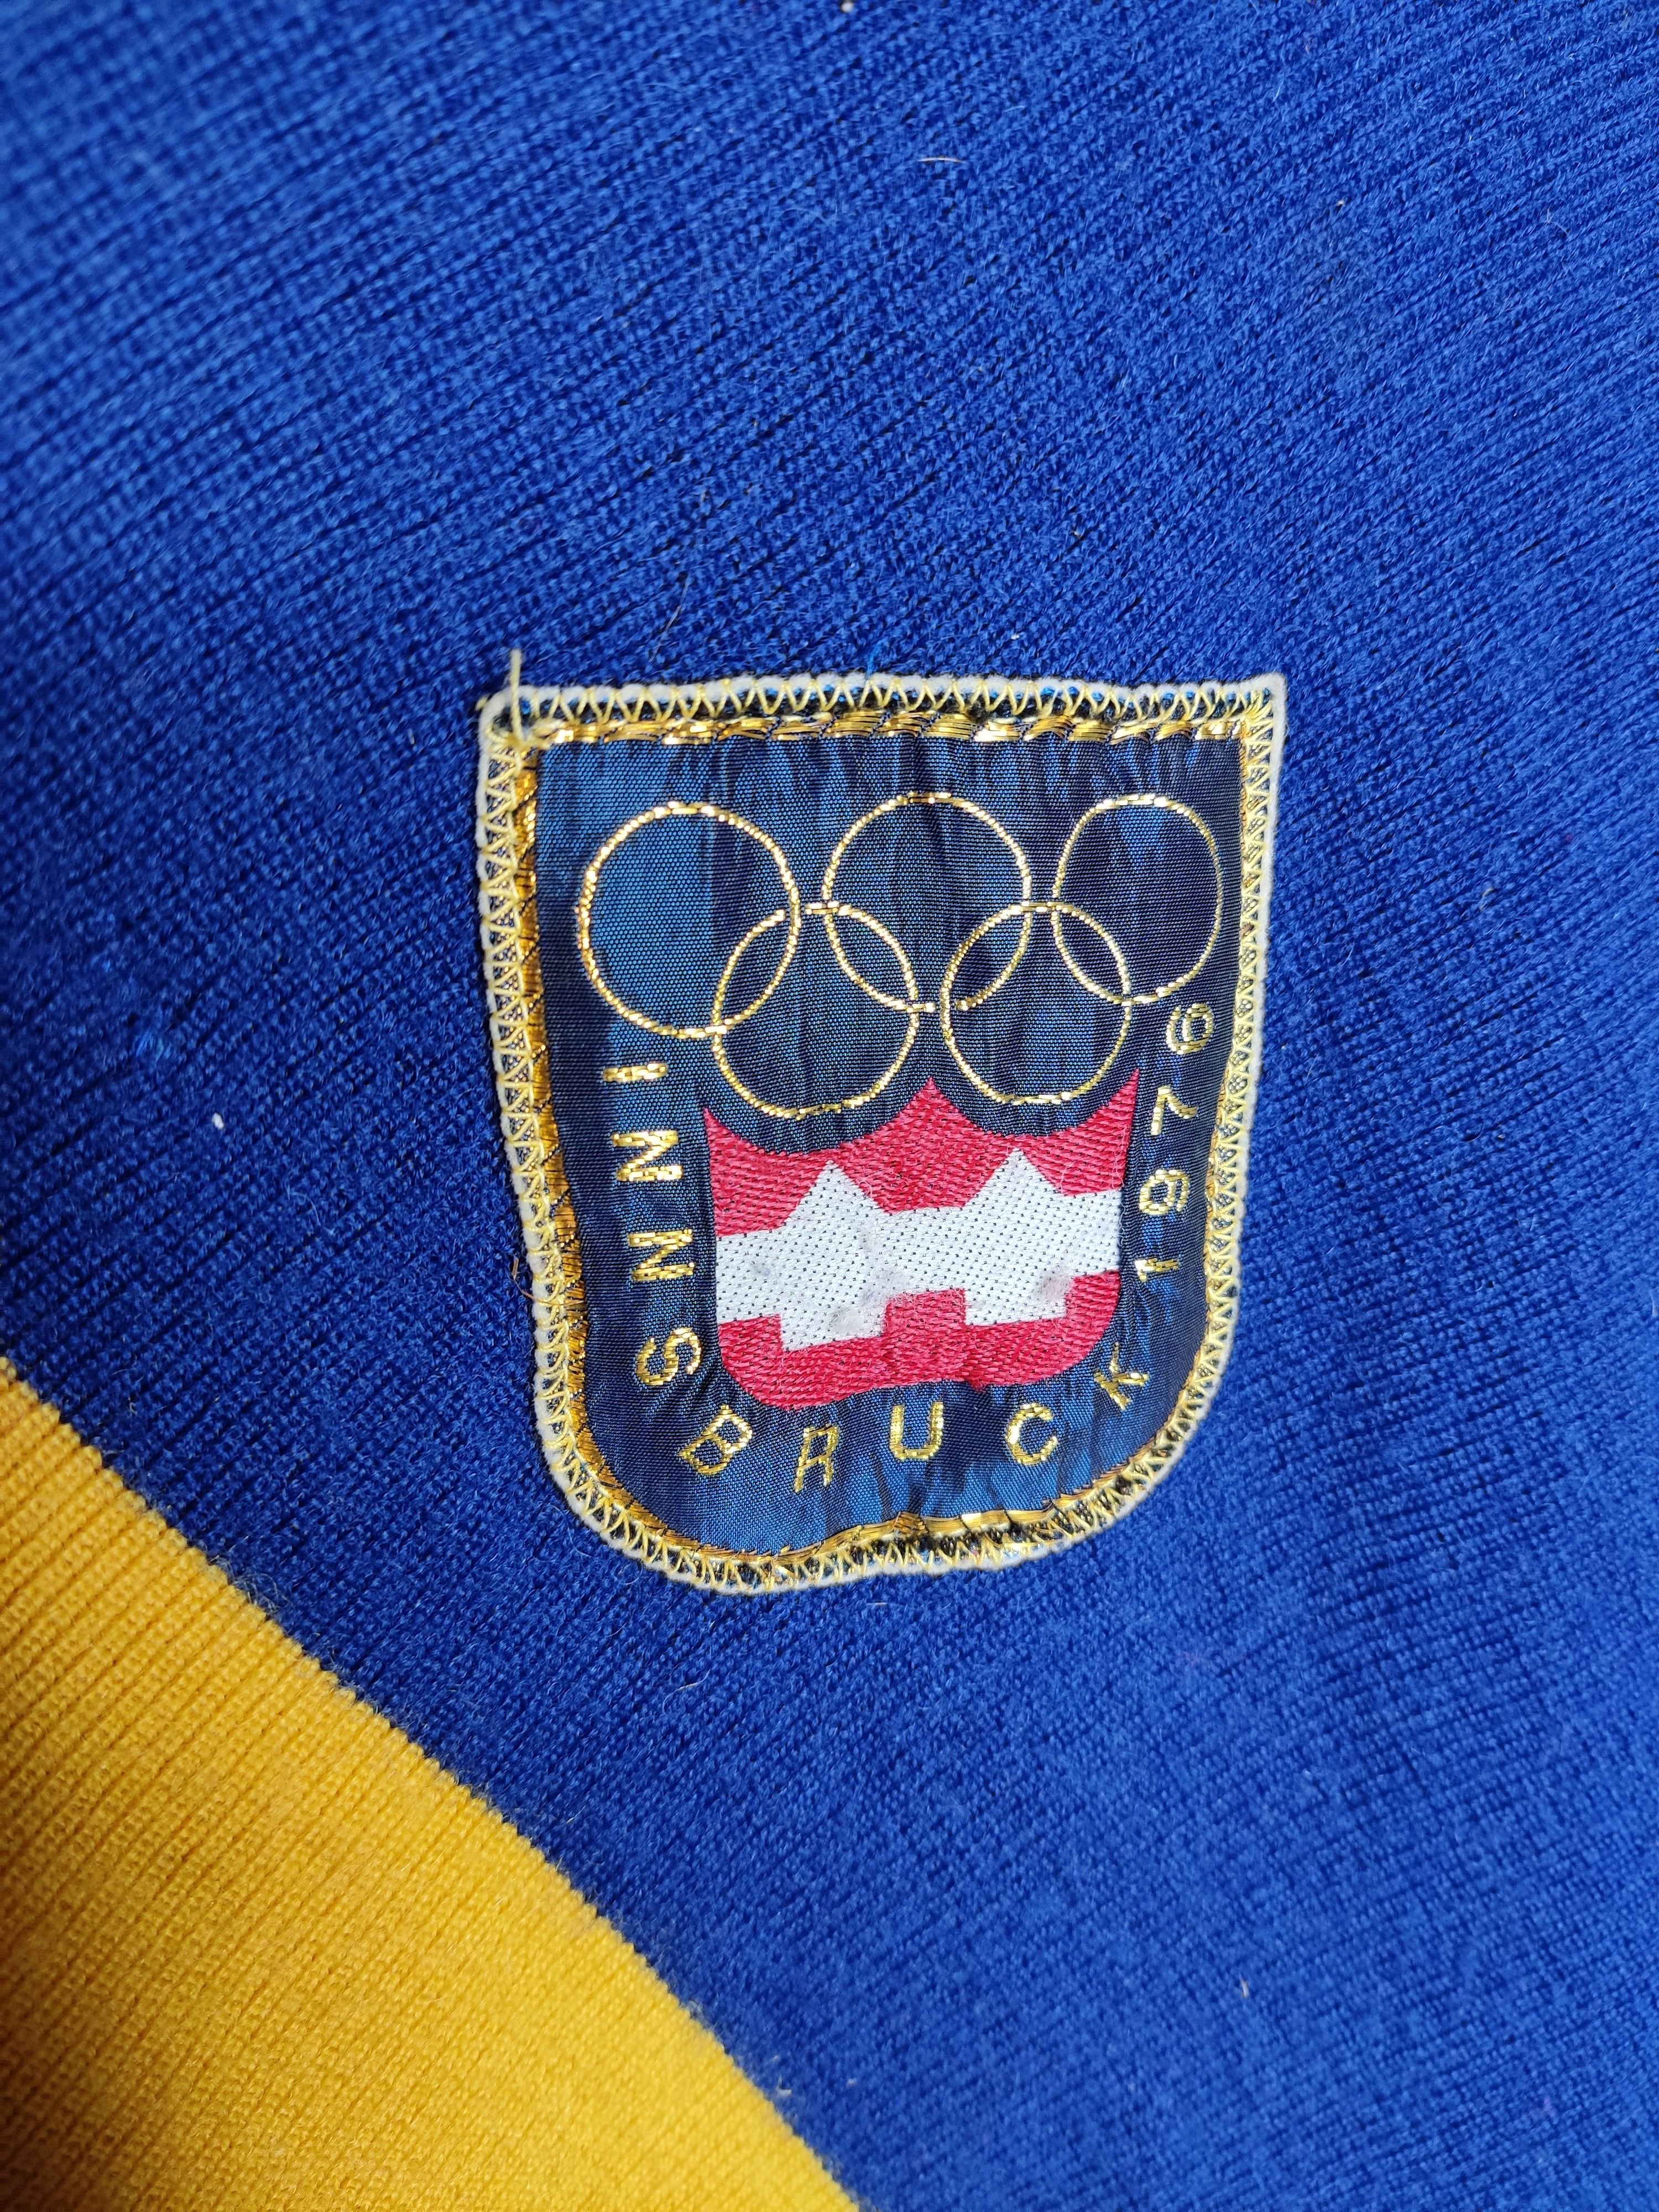 Vintage Innsbruck Austria 1976 Olympics Games Knit Sweater Size US L / EU 52-54 / 3 - 2 Preview